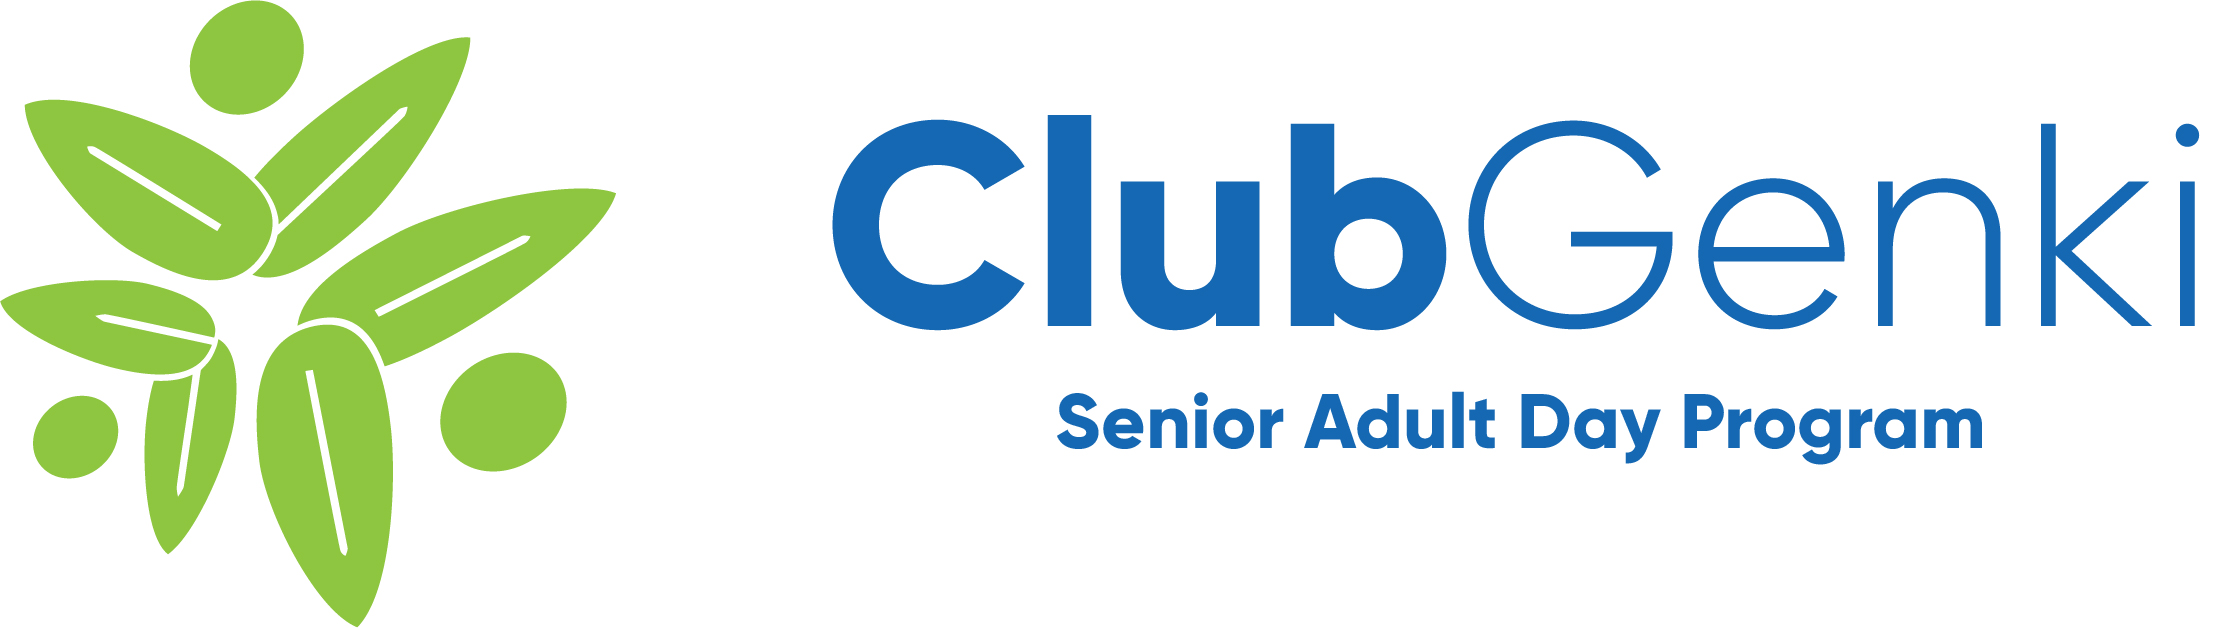 adult social services logo